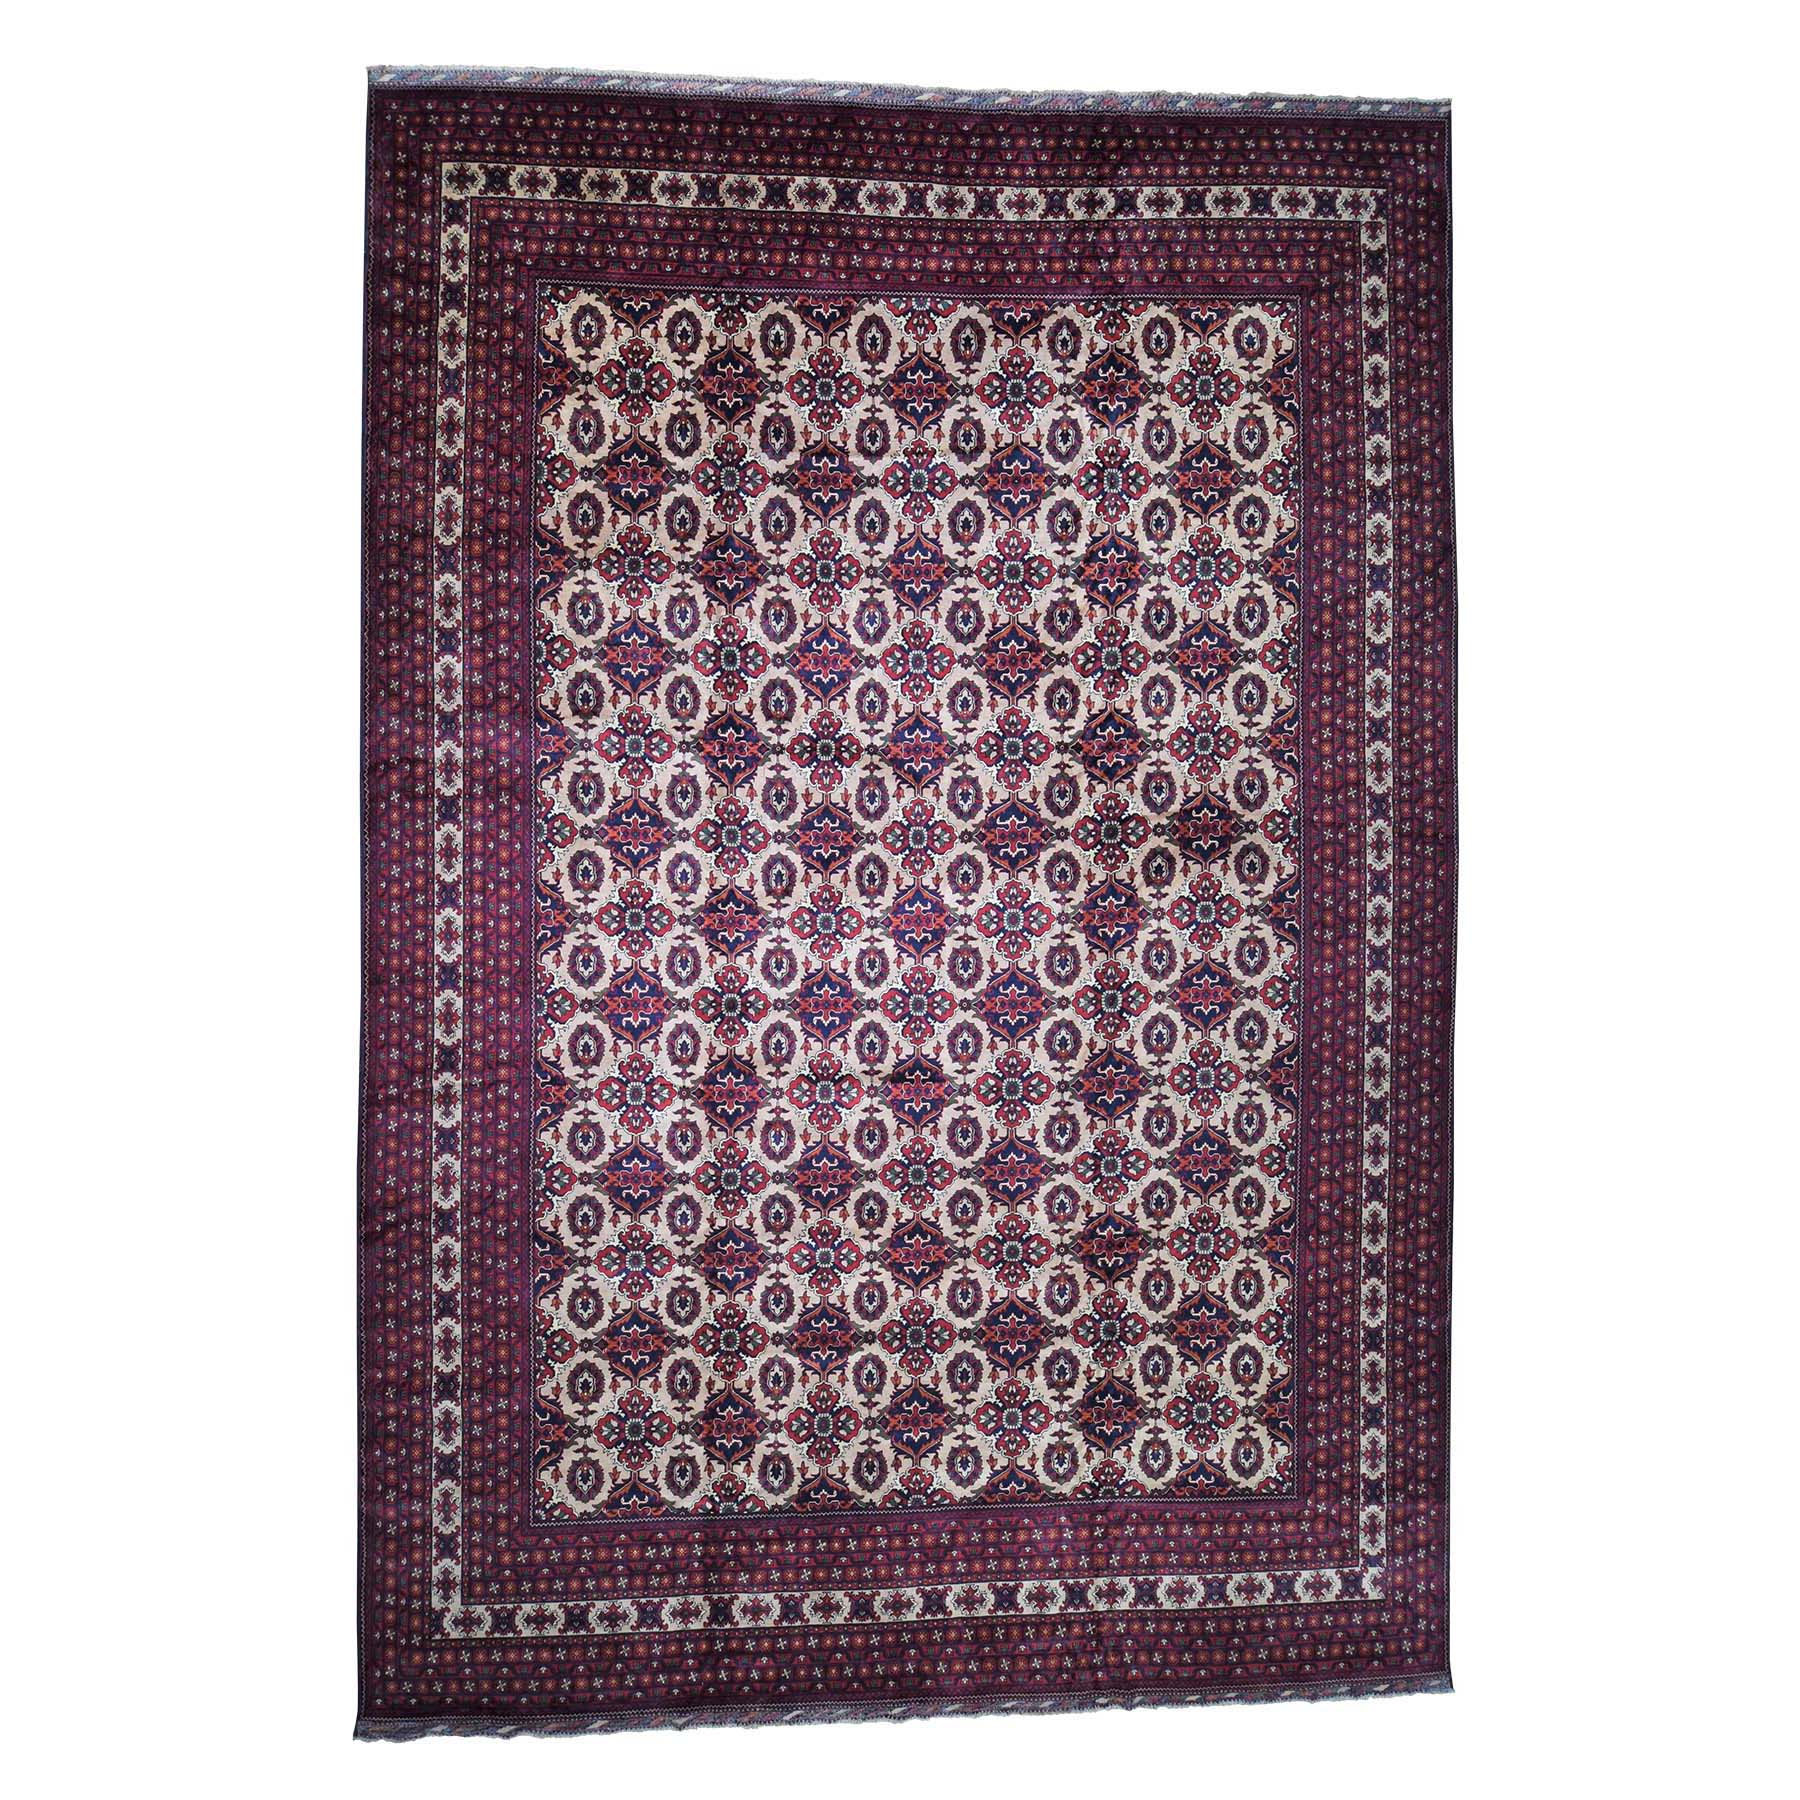 13'x19'4" Oversize Afghan Khamyab Hand Woven Pure Wool Oriental Rug 